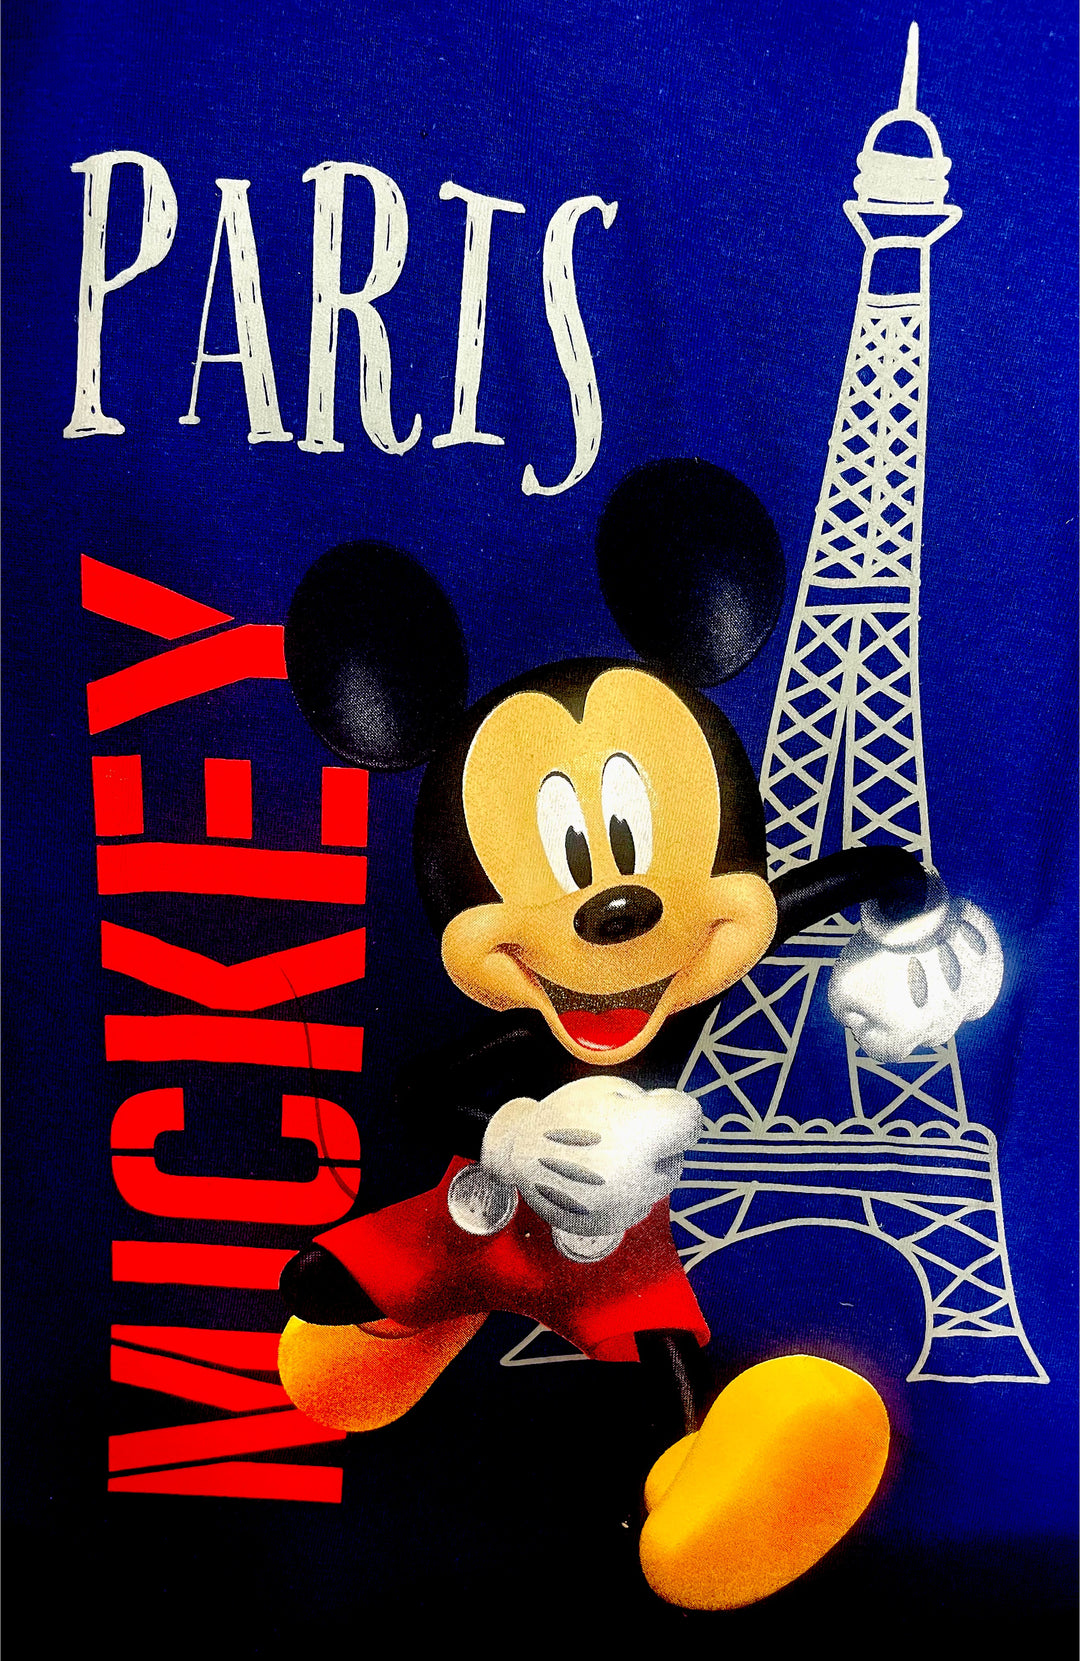 Tee shirt Tour Eiffel Mickey Disney